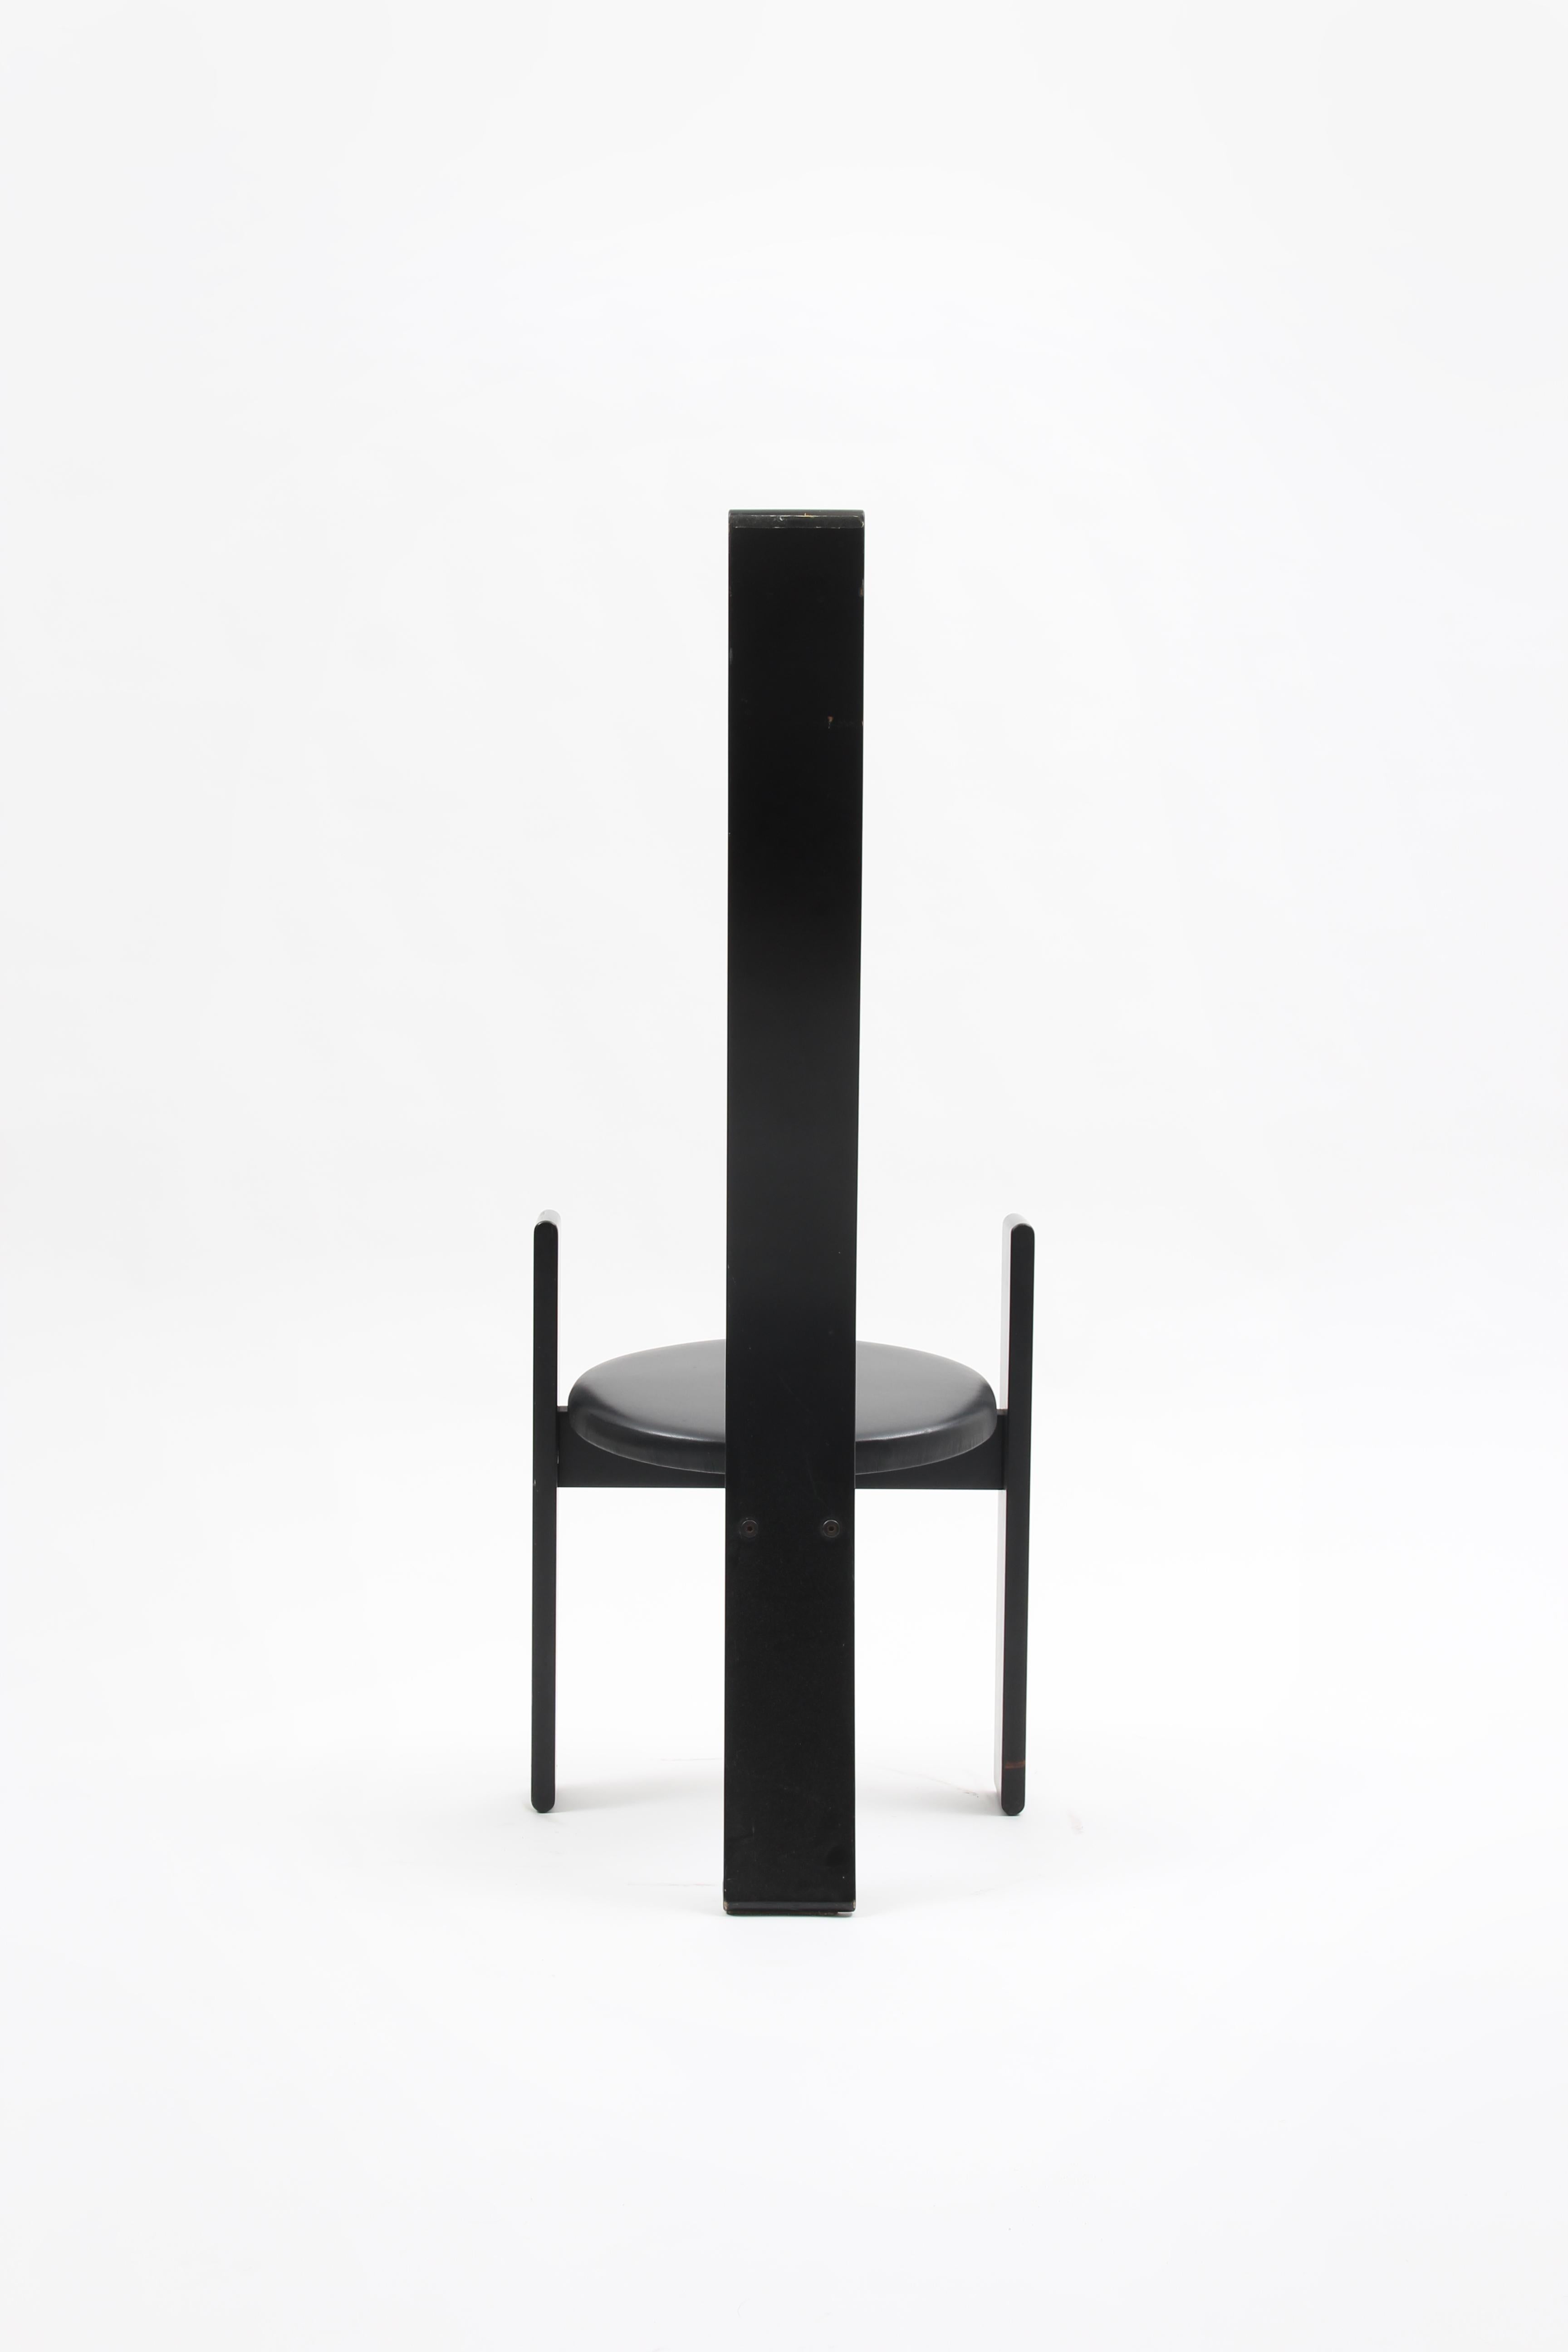 Mid-20th Century Golem Chair by Vico Magistretti for Poggi, 1969